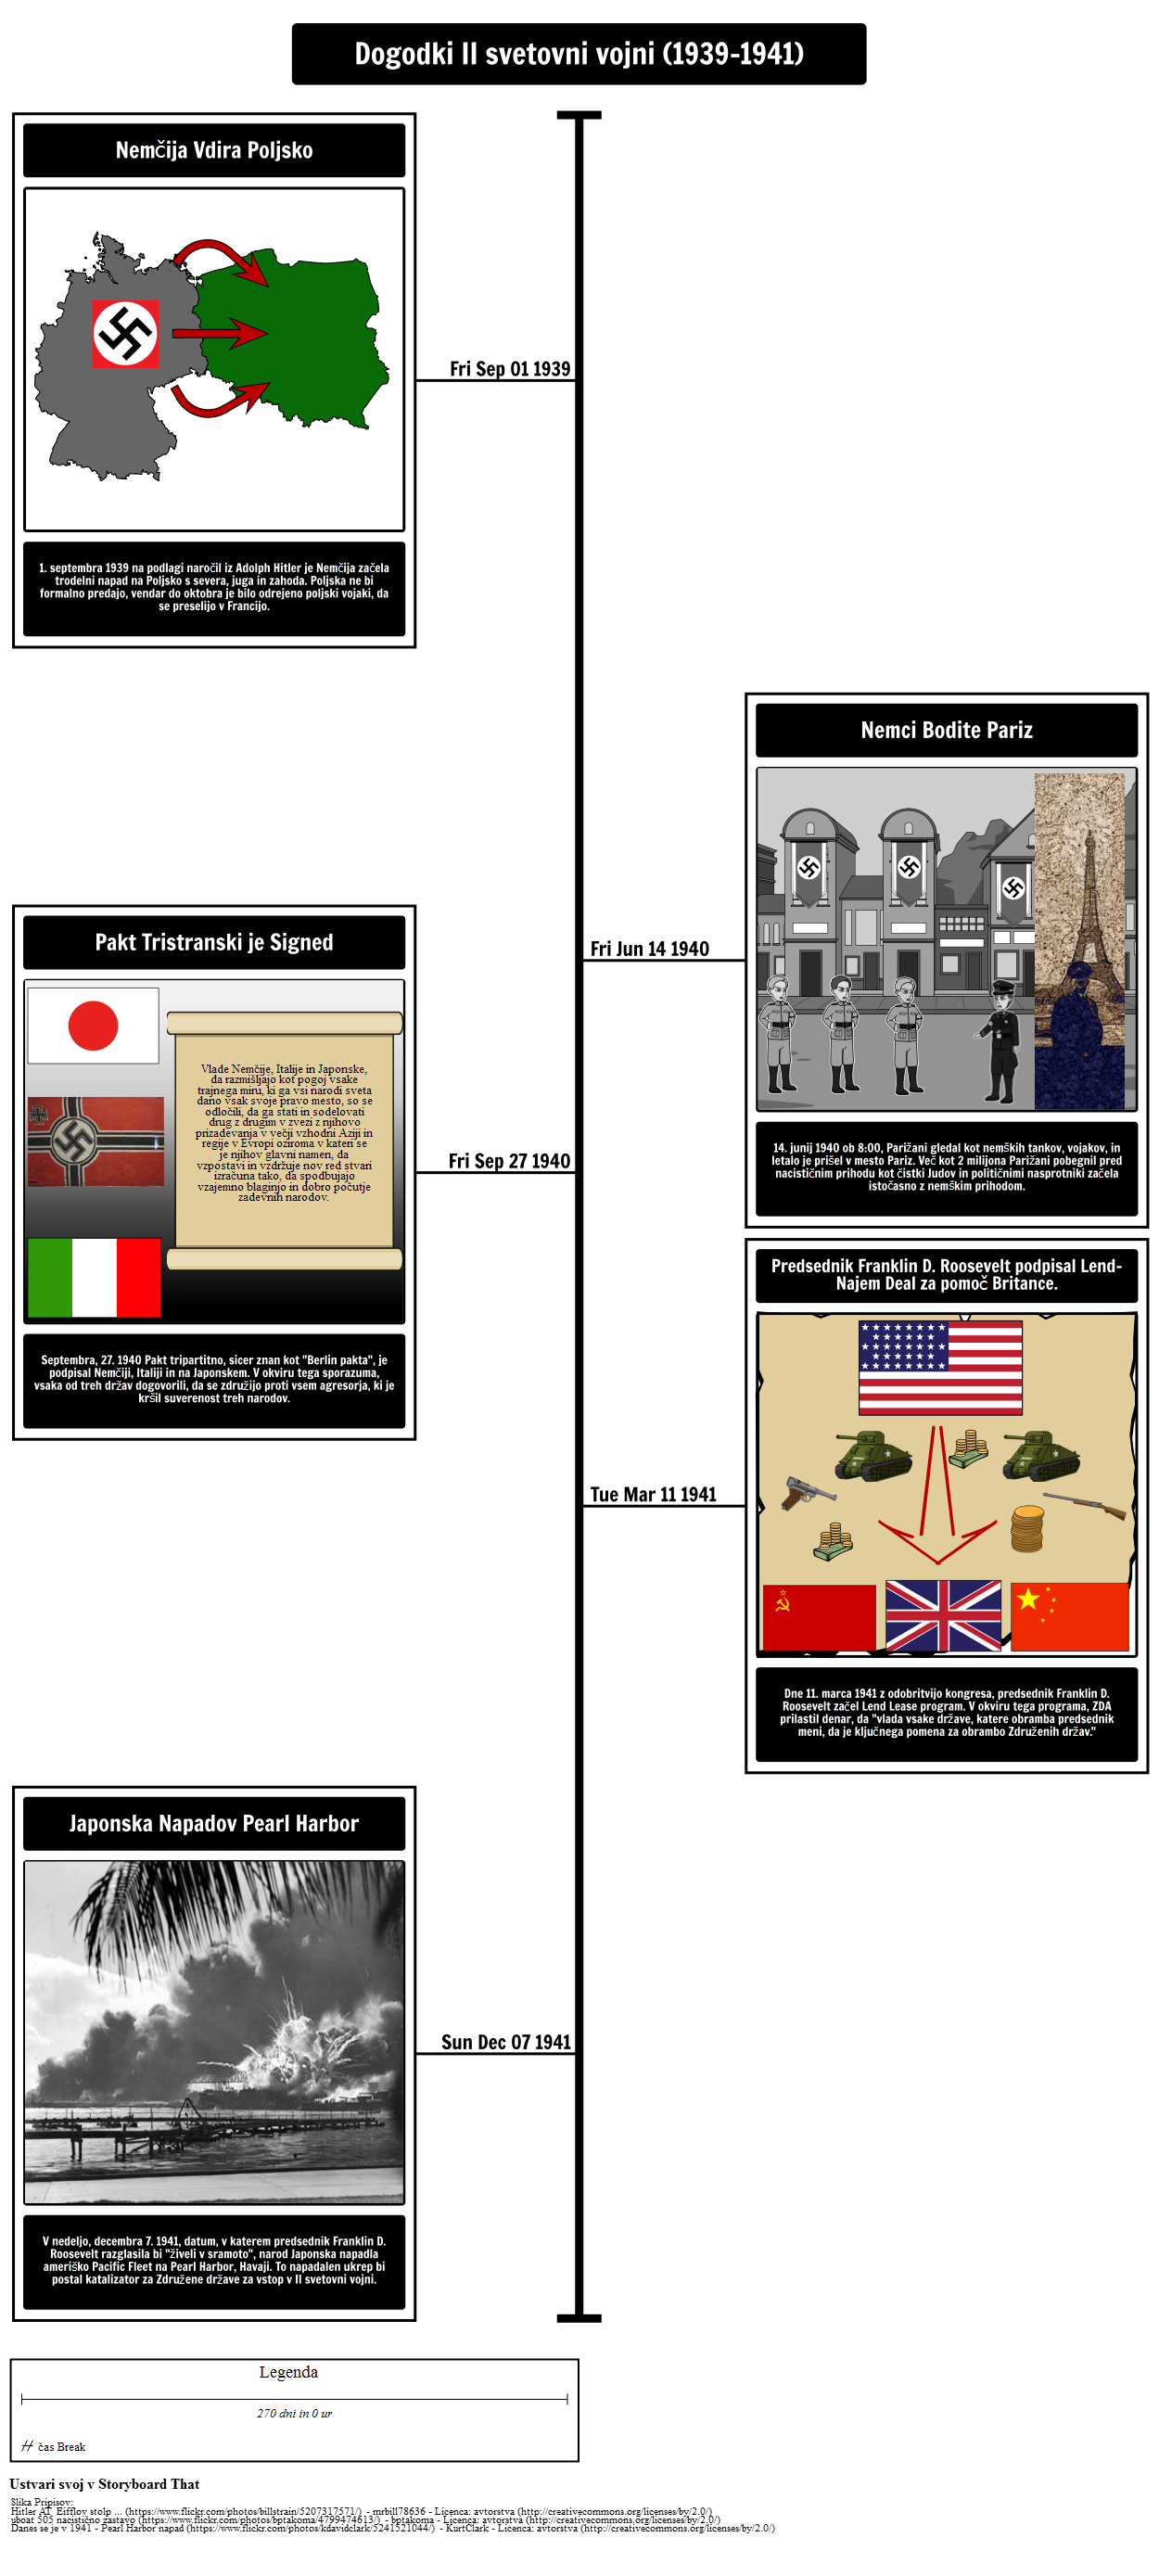 World War II Timeline 1939-1941